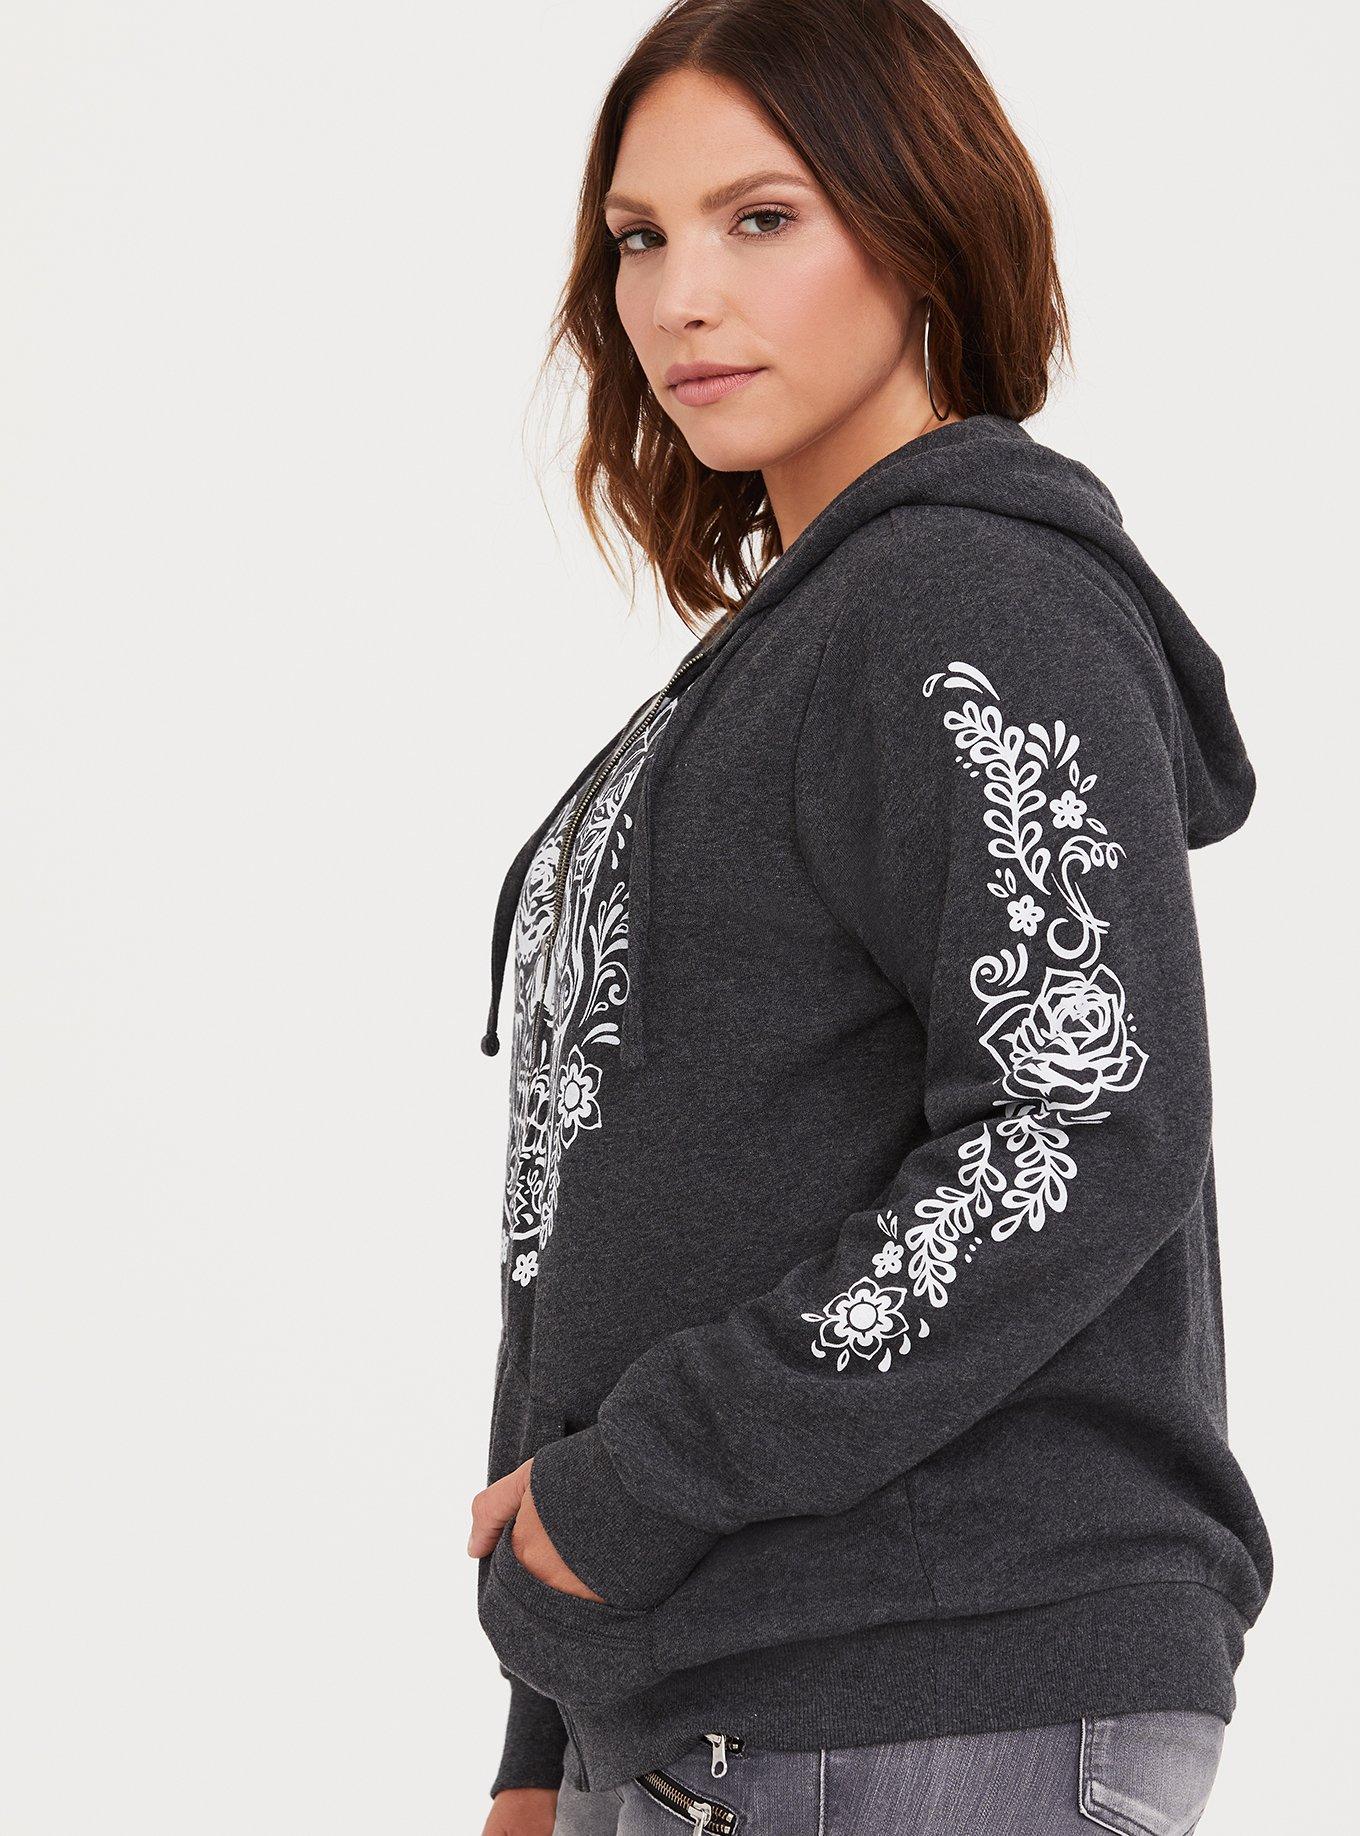 Plus Size Hoodies & Sweatshirts for Women: Skull & Tunic Sweaters